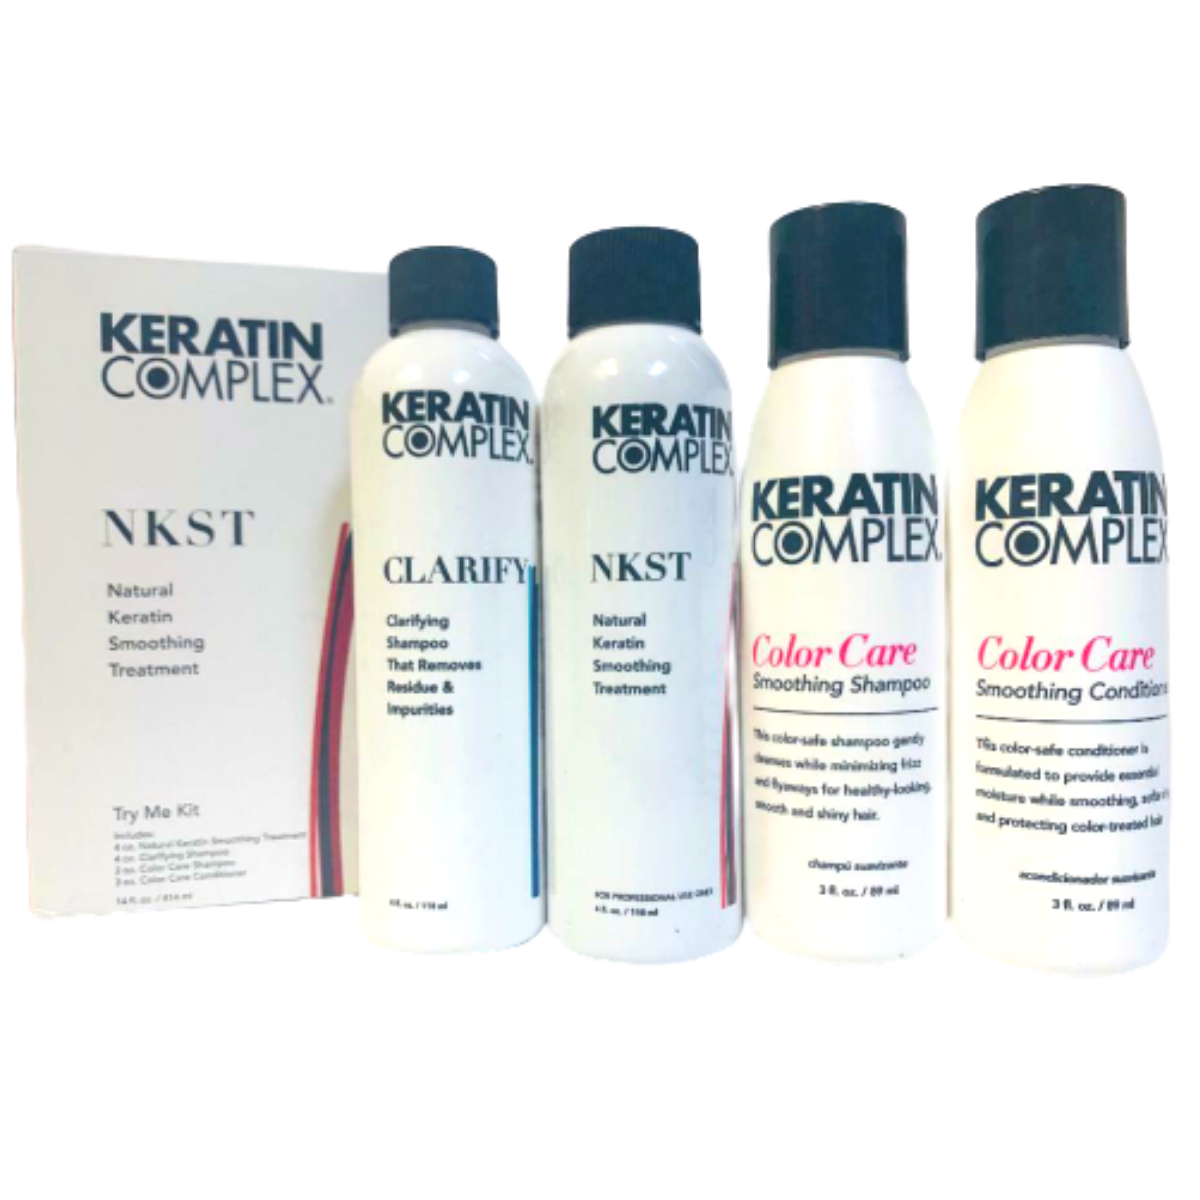 Keratin Complex Natural Keratin Smoothing Treatment Try Me Kit